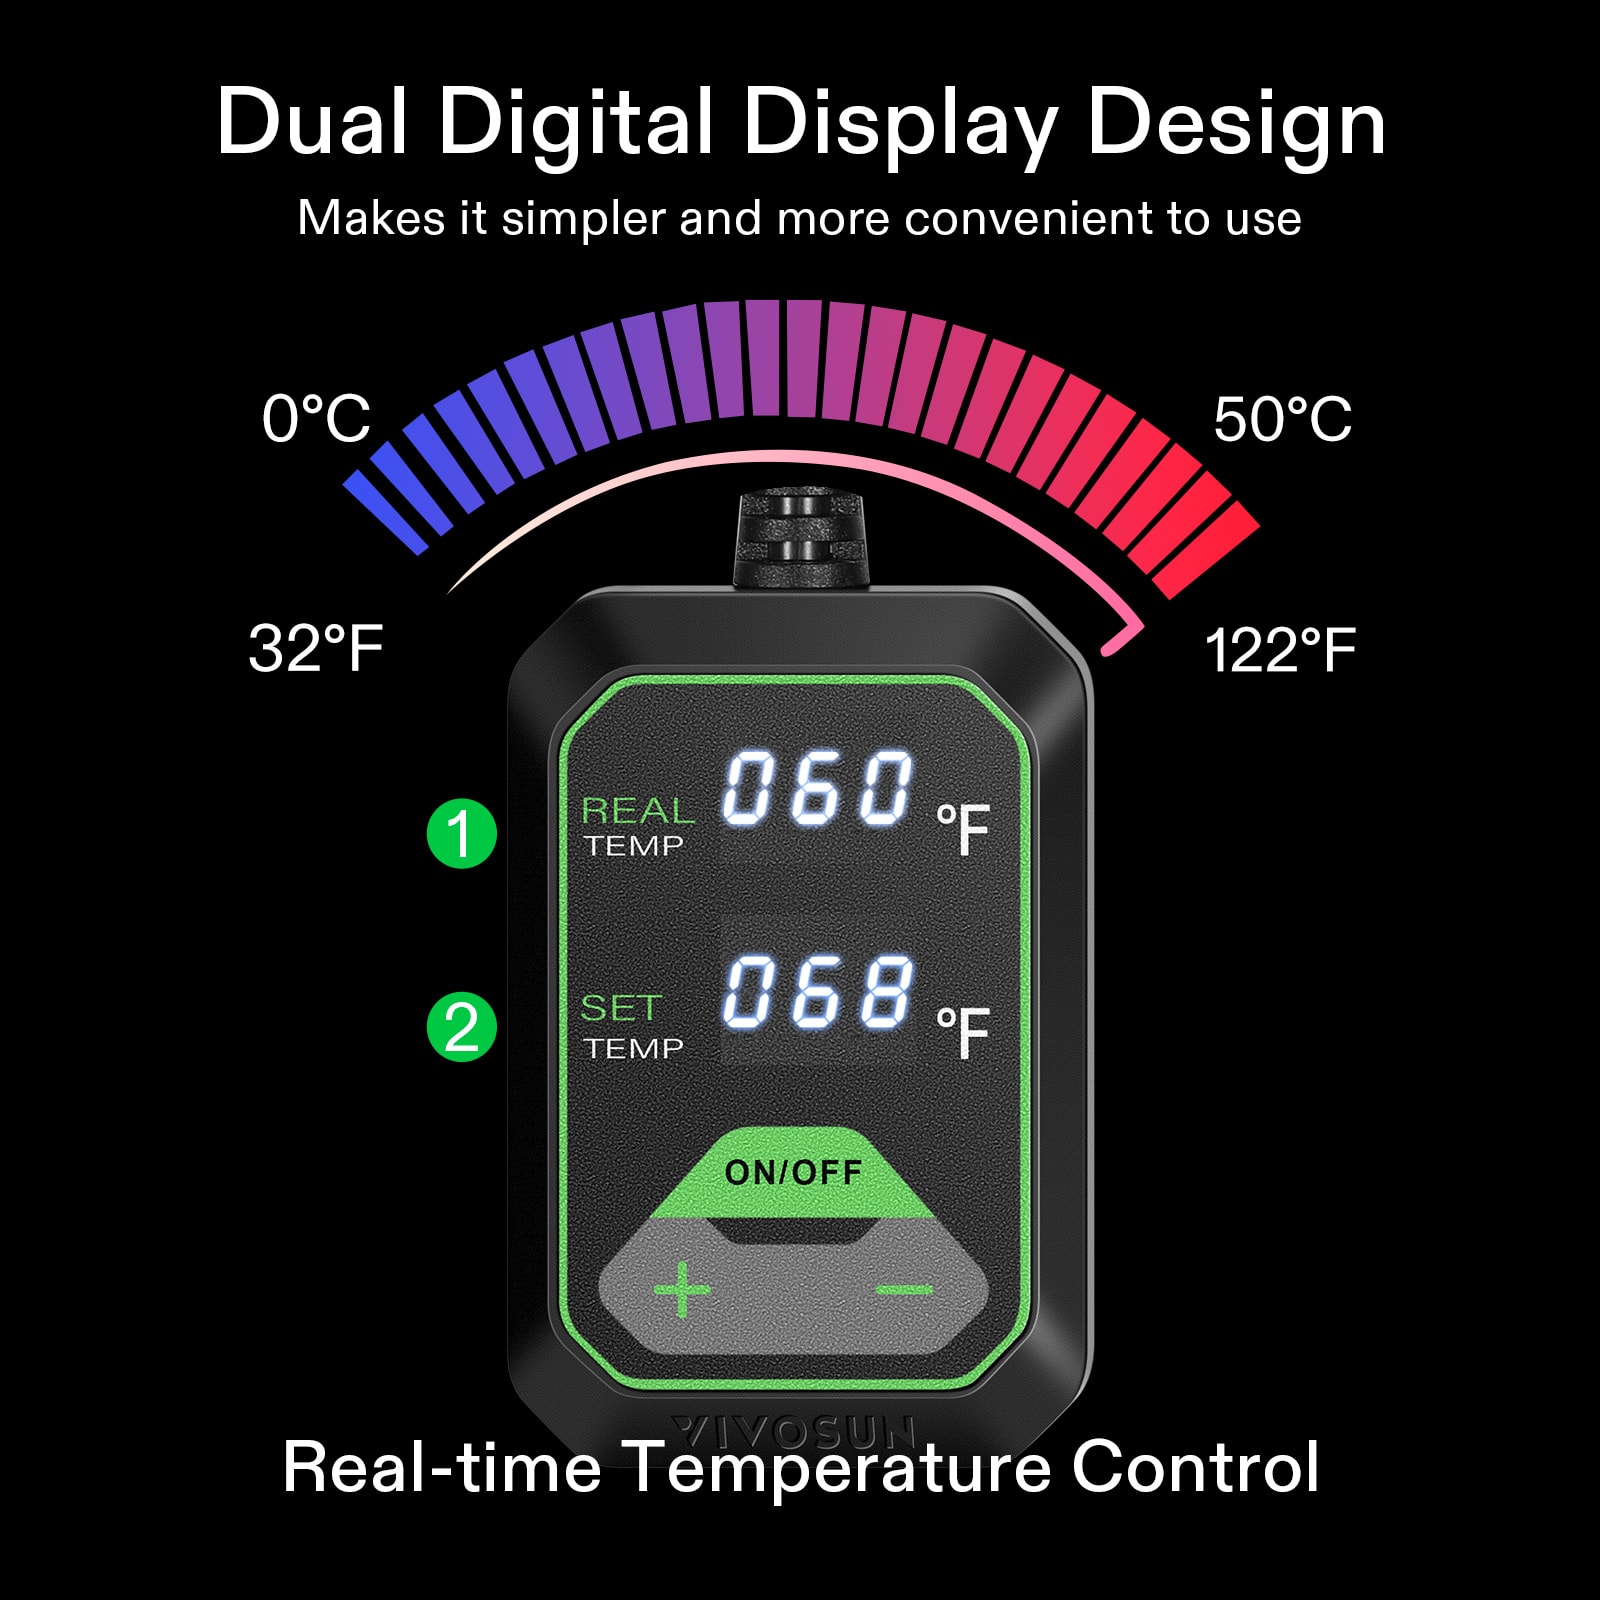 VIVOSUN 10x20.75 Seedling Heat Mat and Digital Thermostat